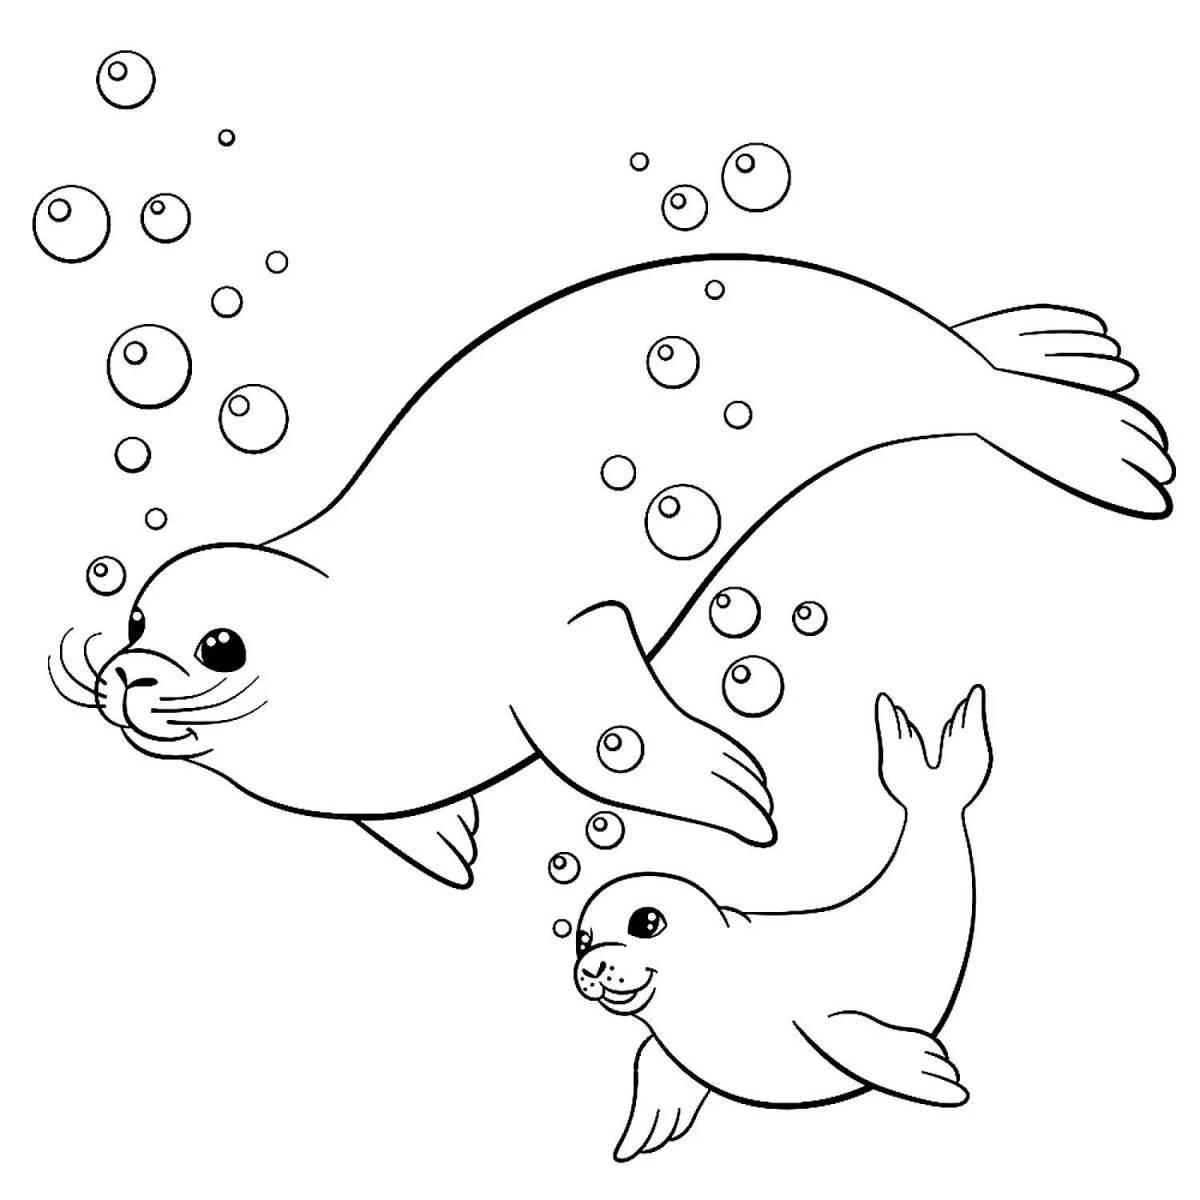 Charming Baikal seal coloring book for kids